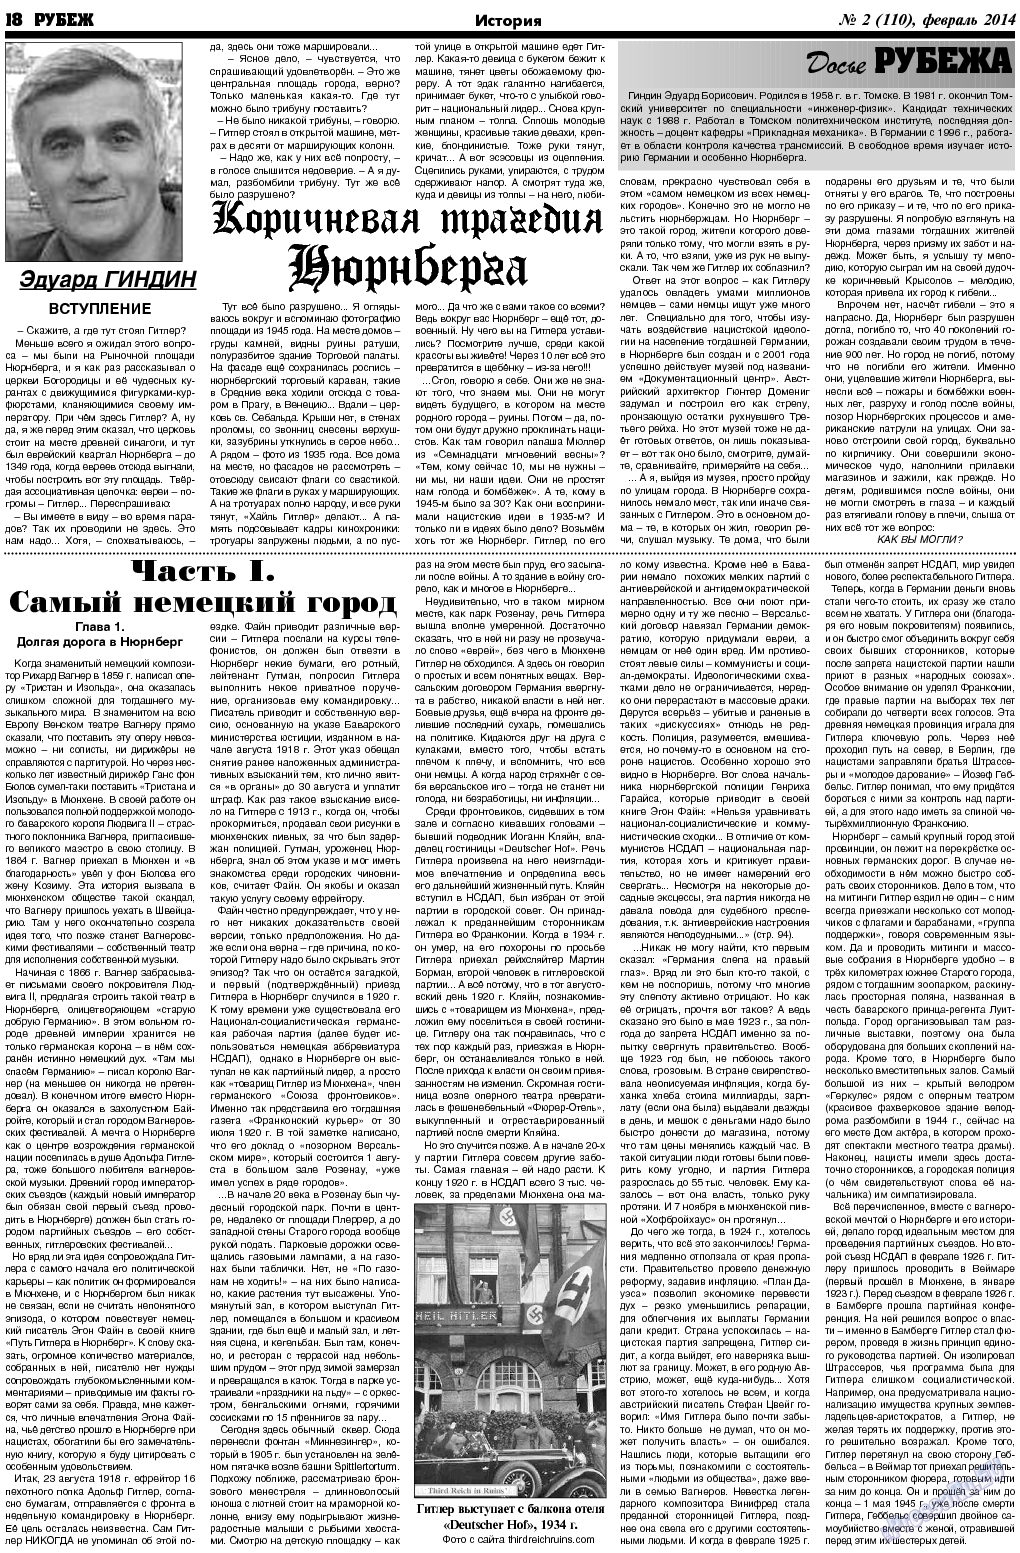 Рубеж, газета. 2014 №2 стр.18